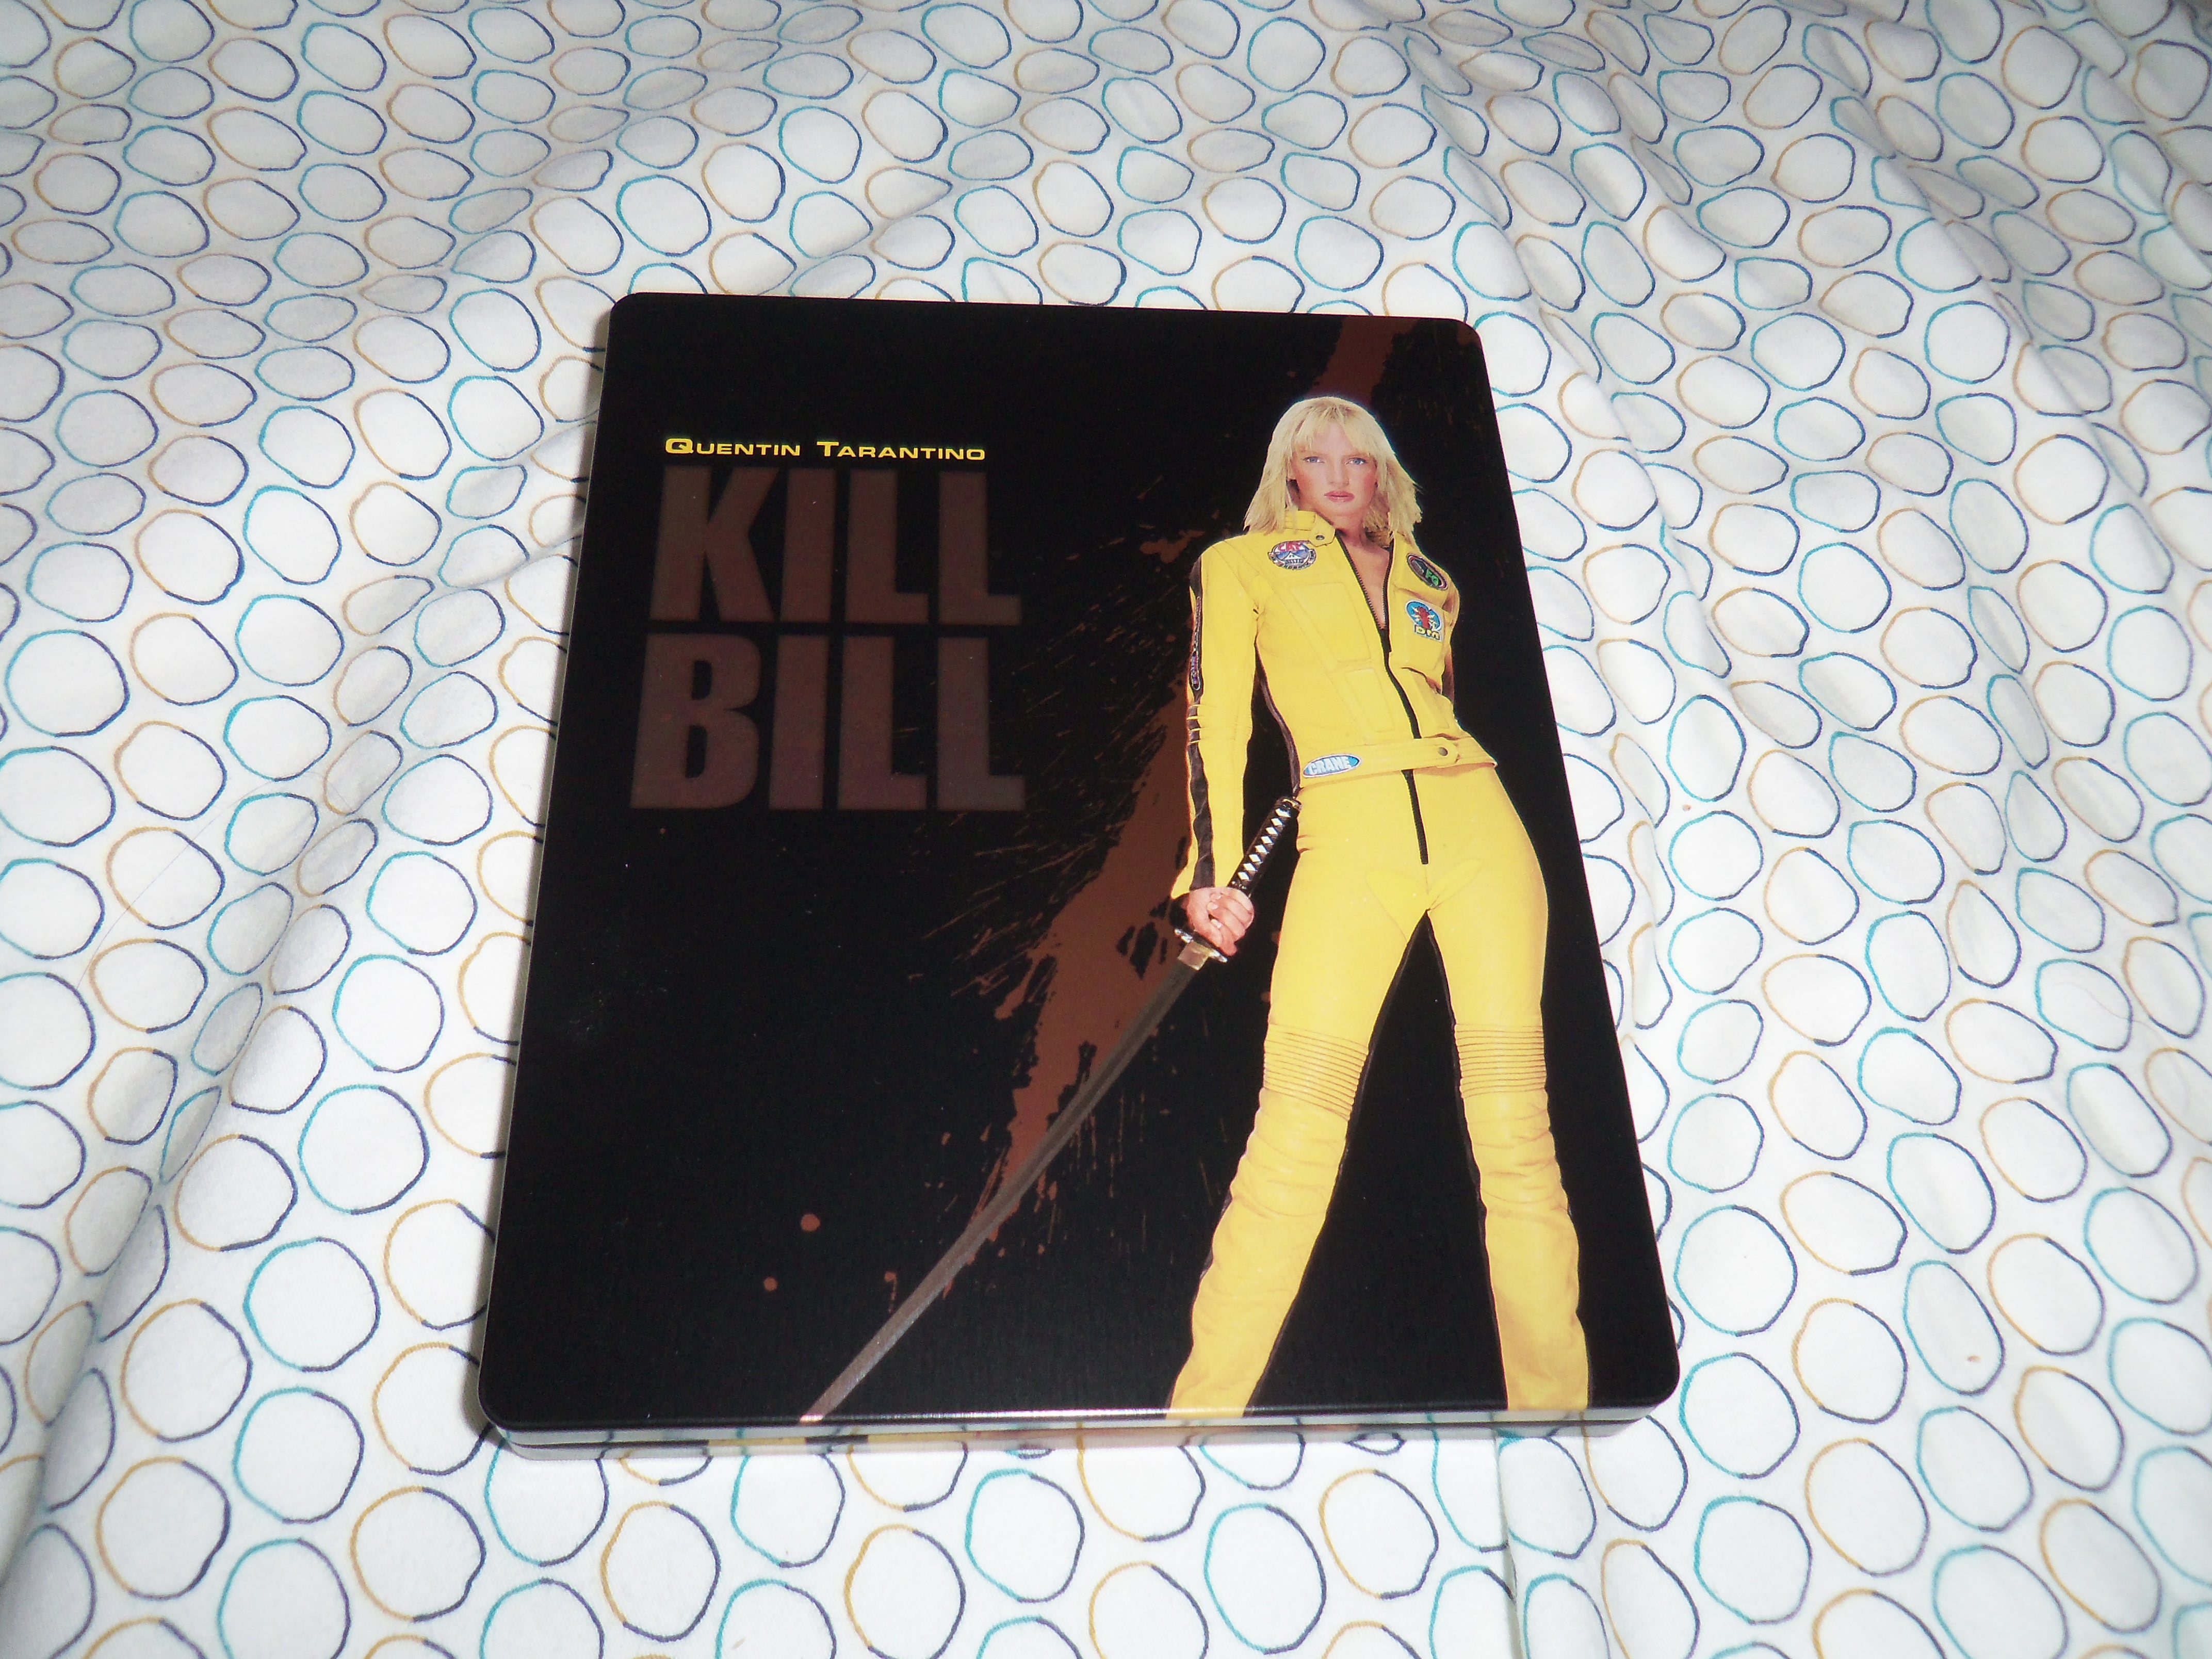 Kill Bill combo pack